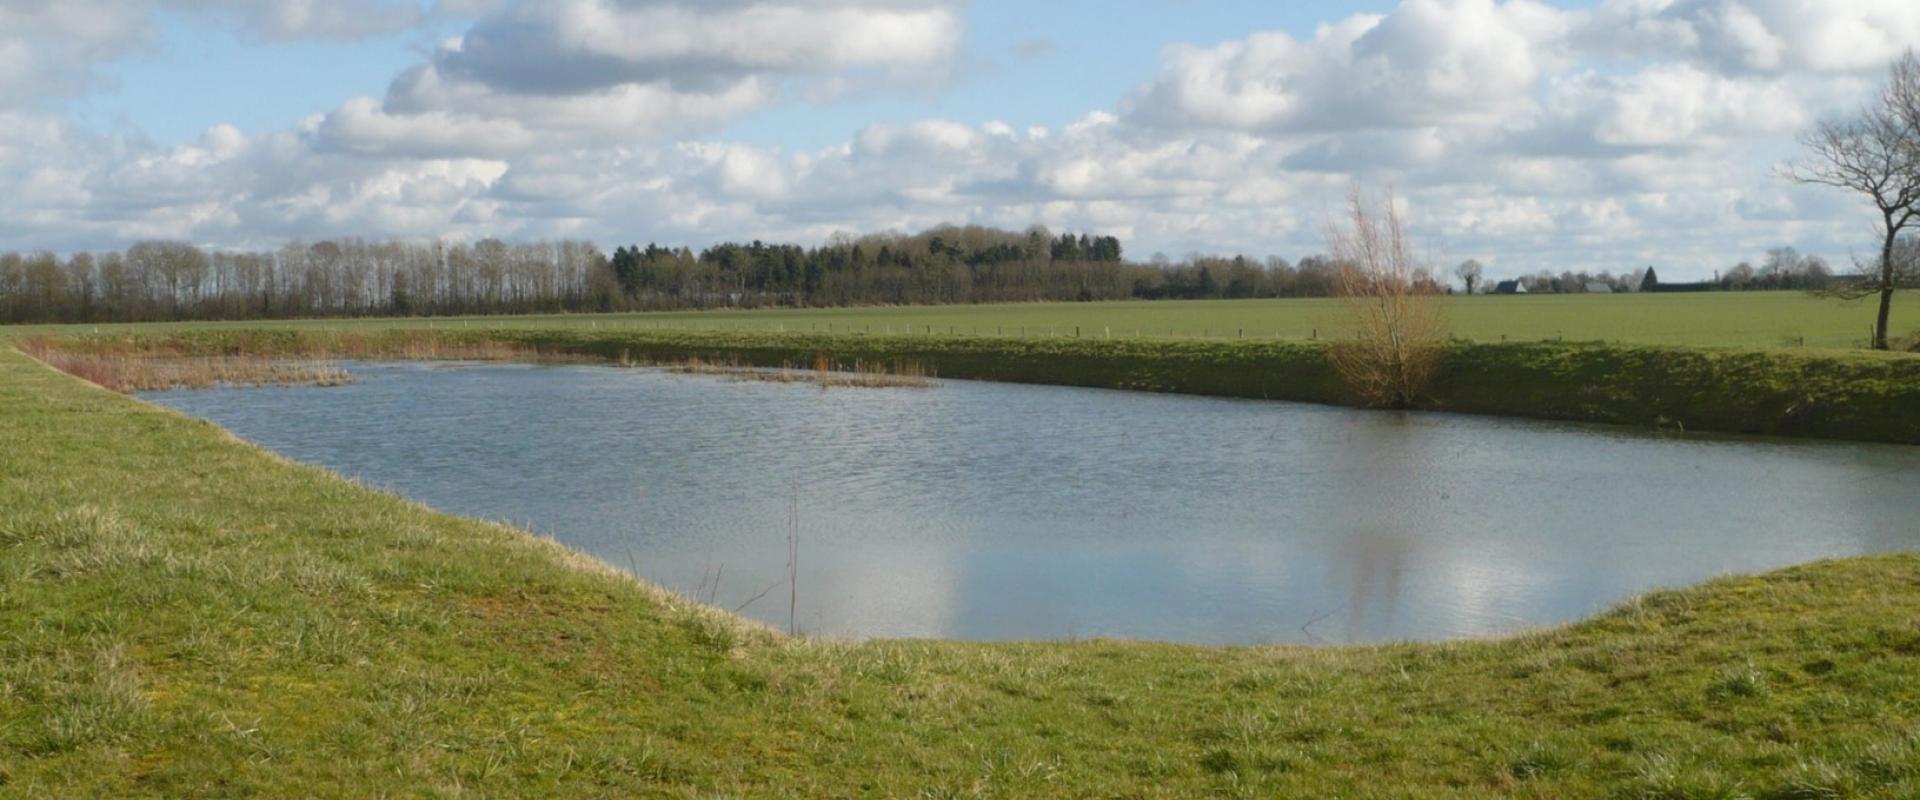 Bassin drainage agricole